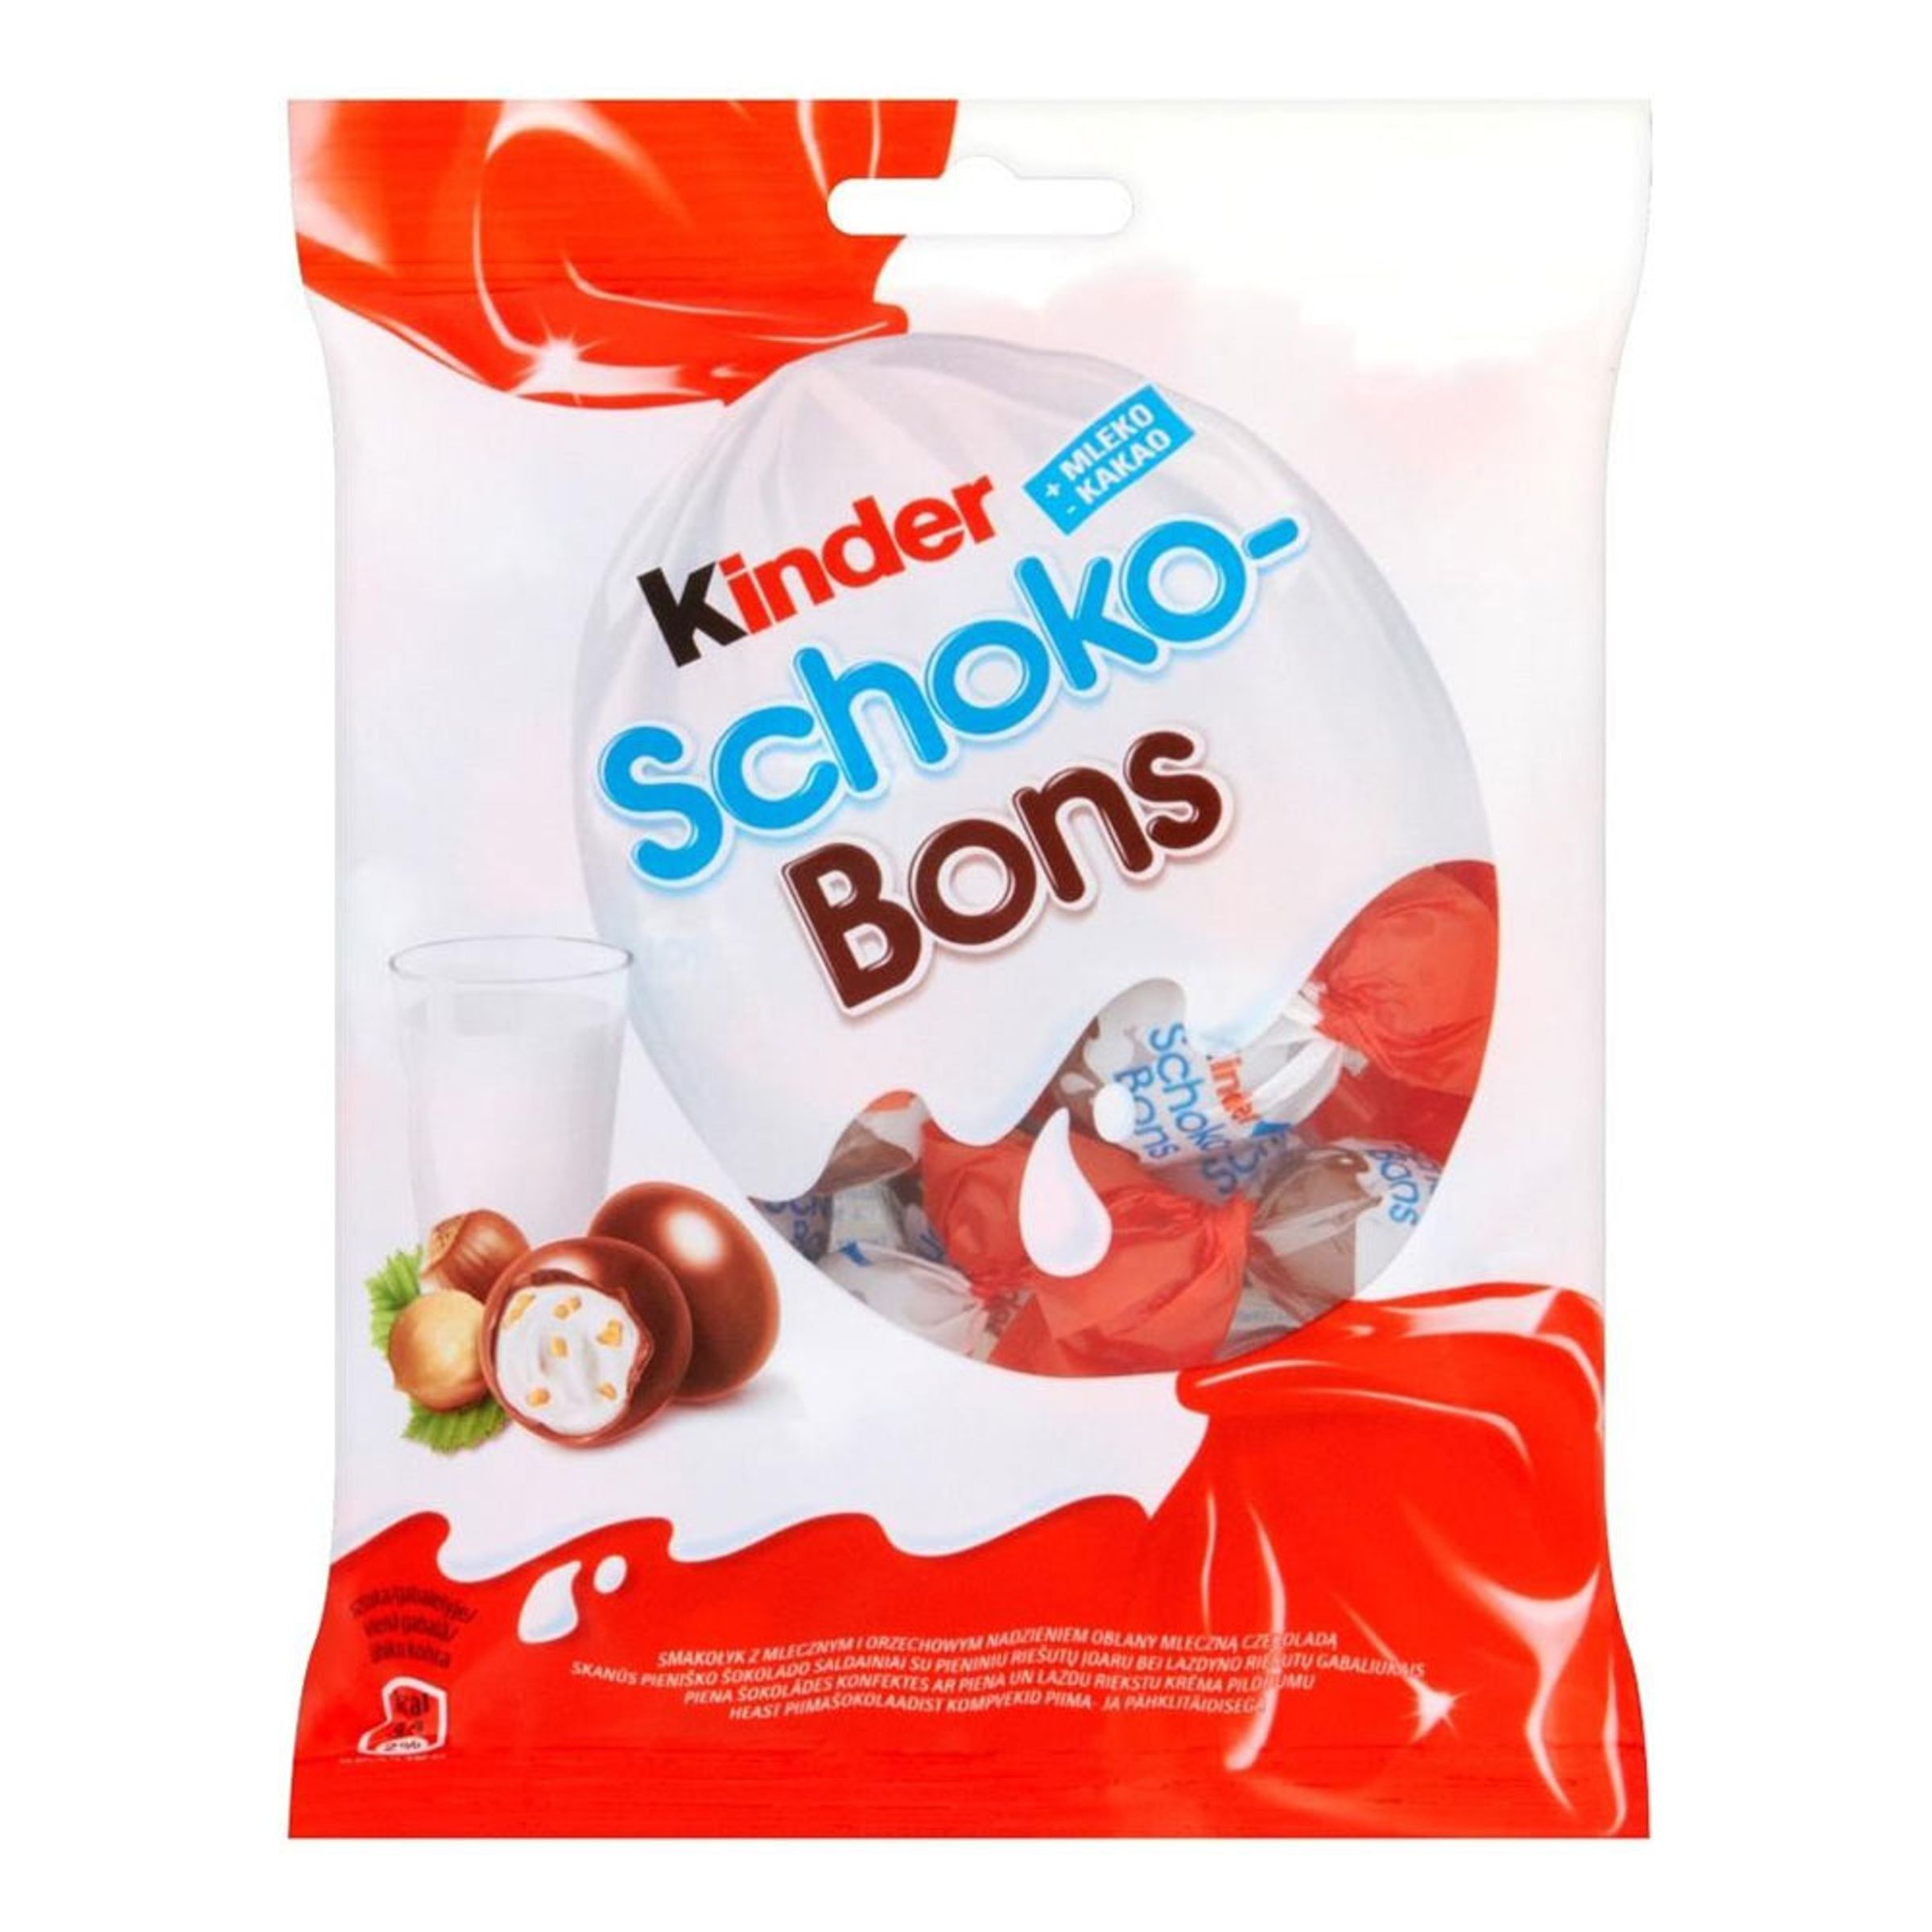 Kinder Schoko-bons - 46 gram